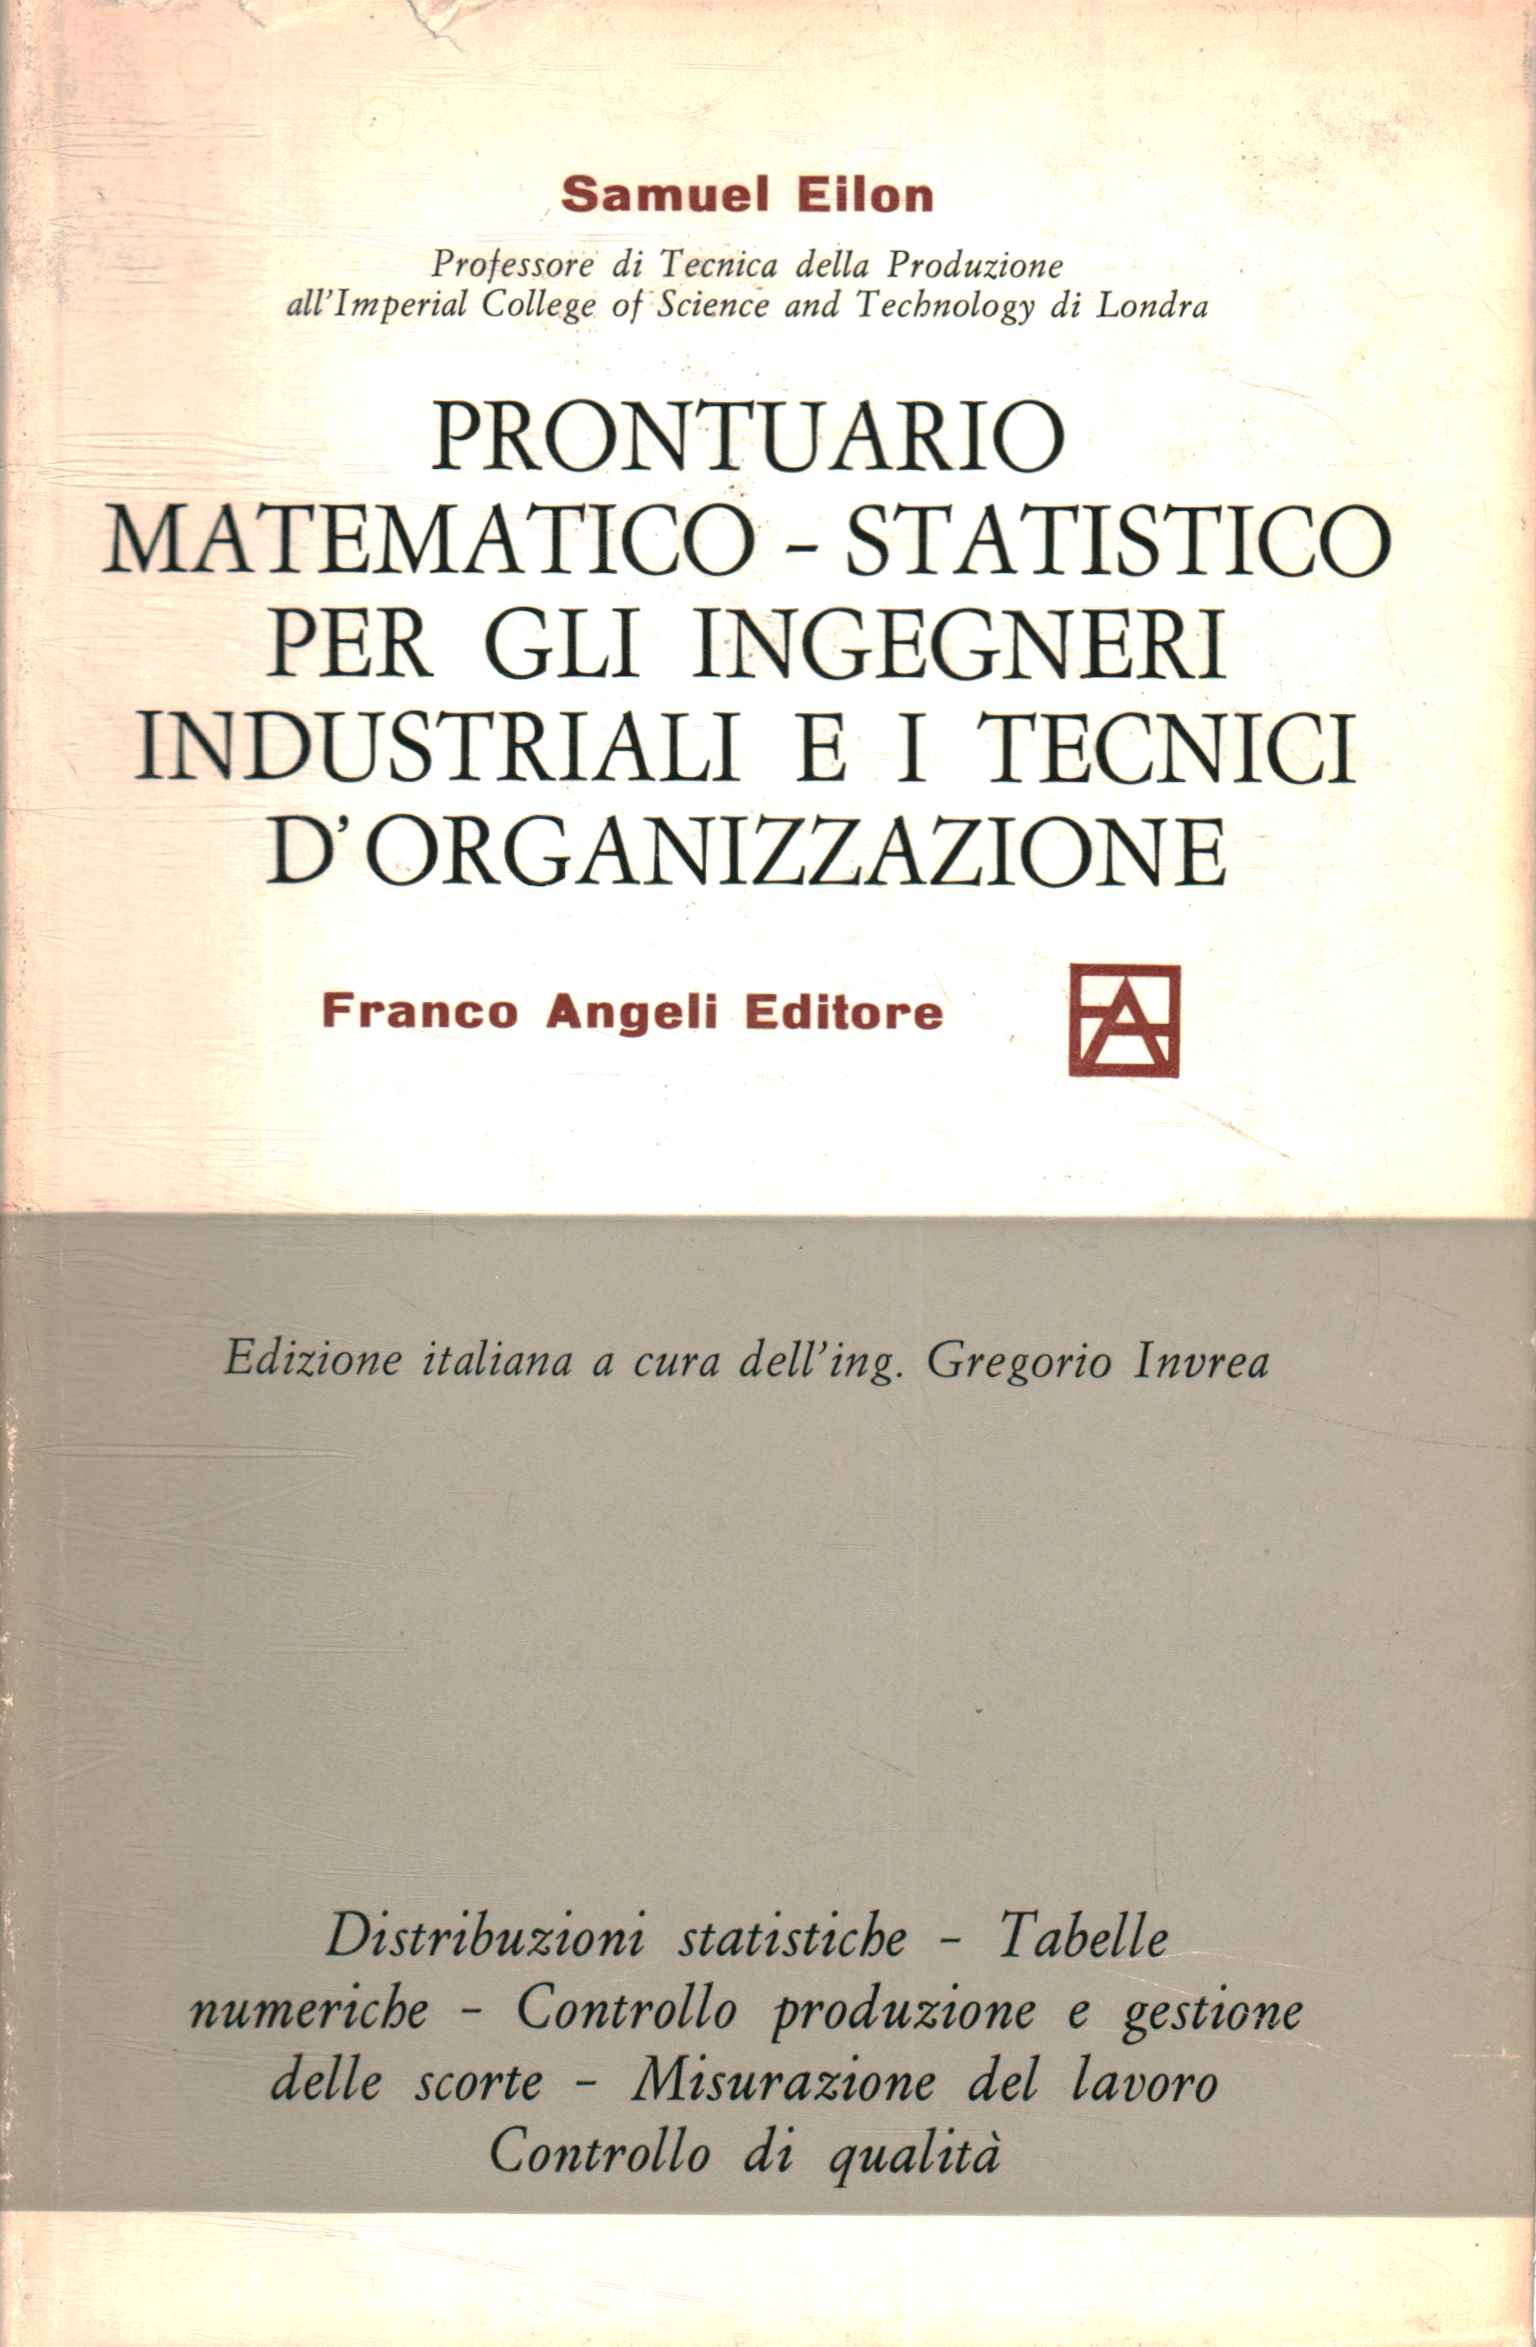 Mathematical-statistical handbook for i